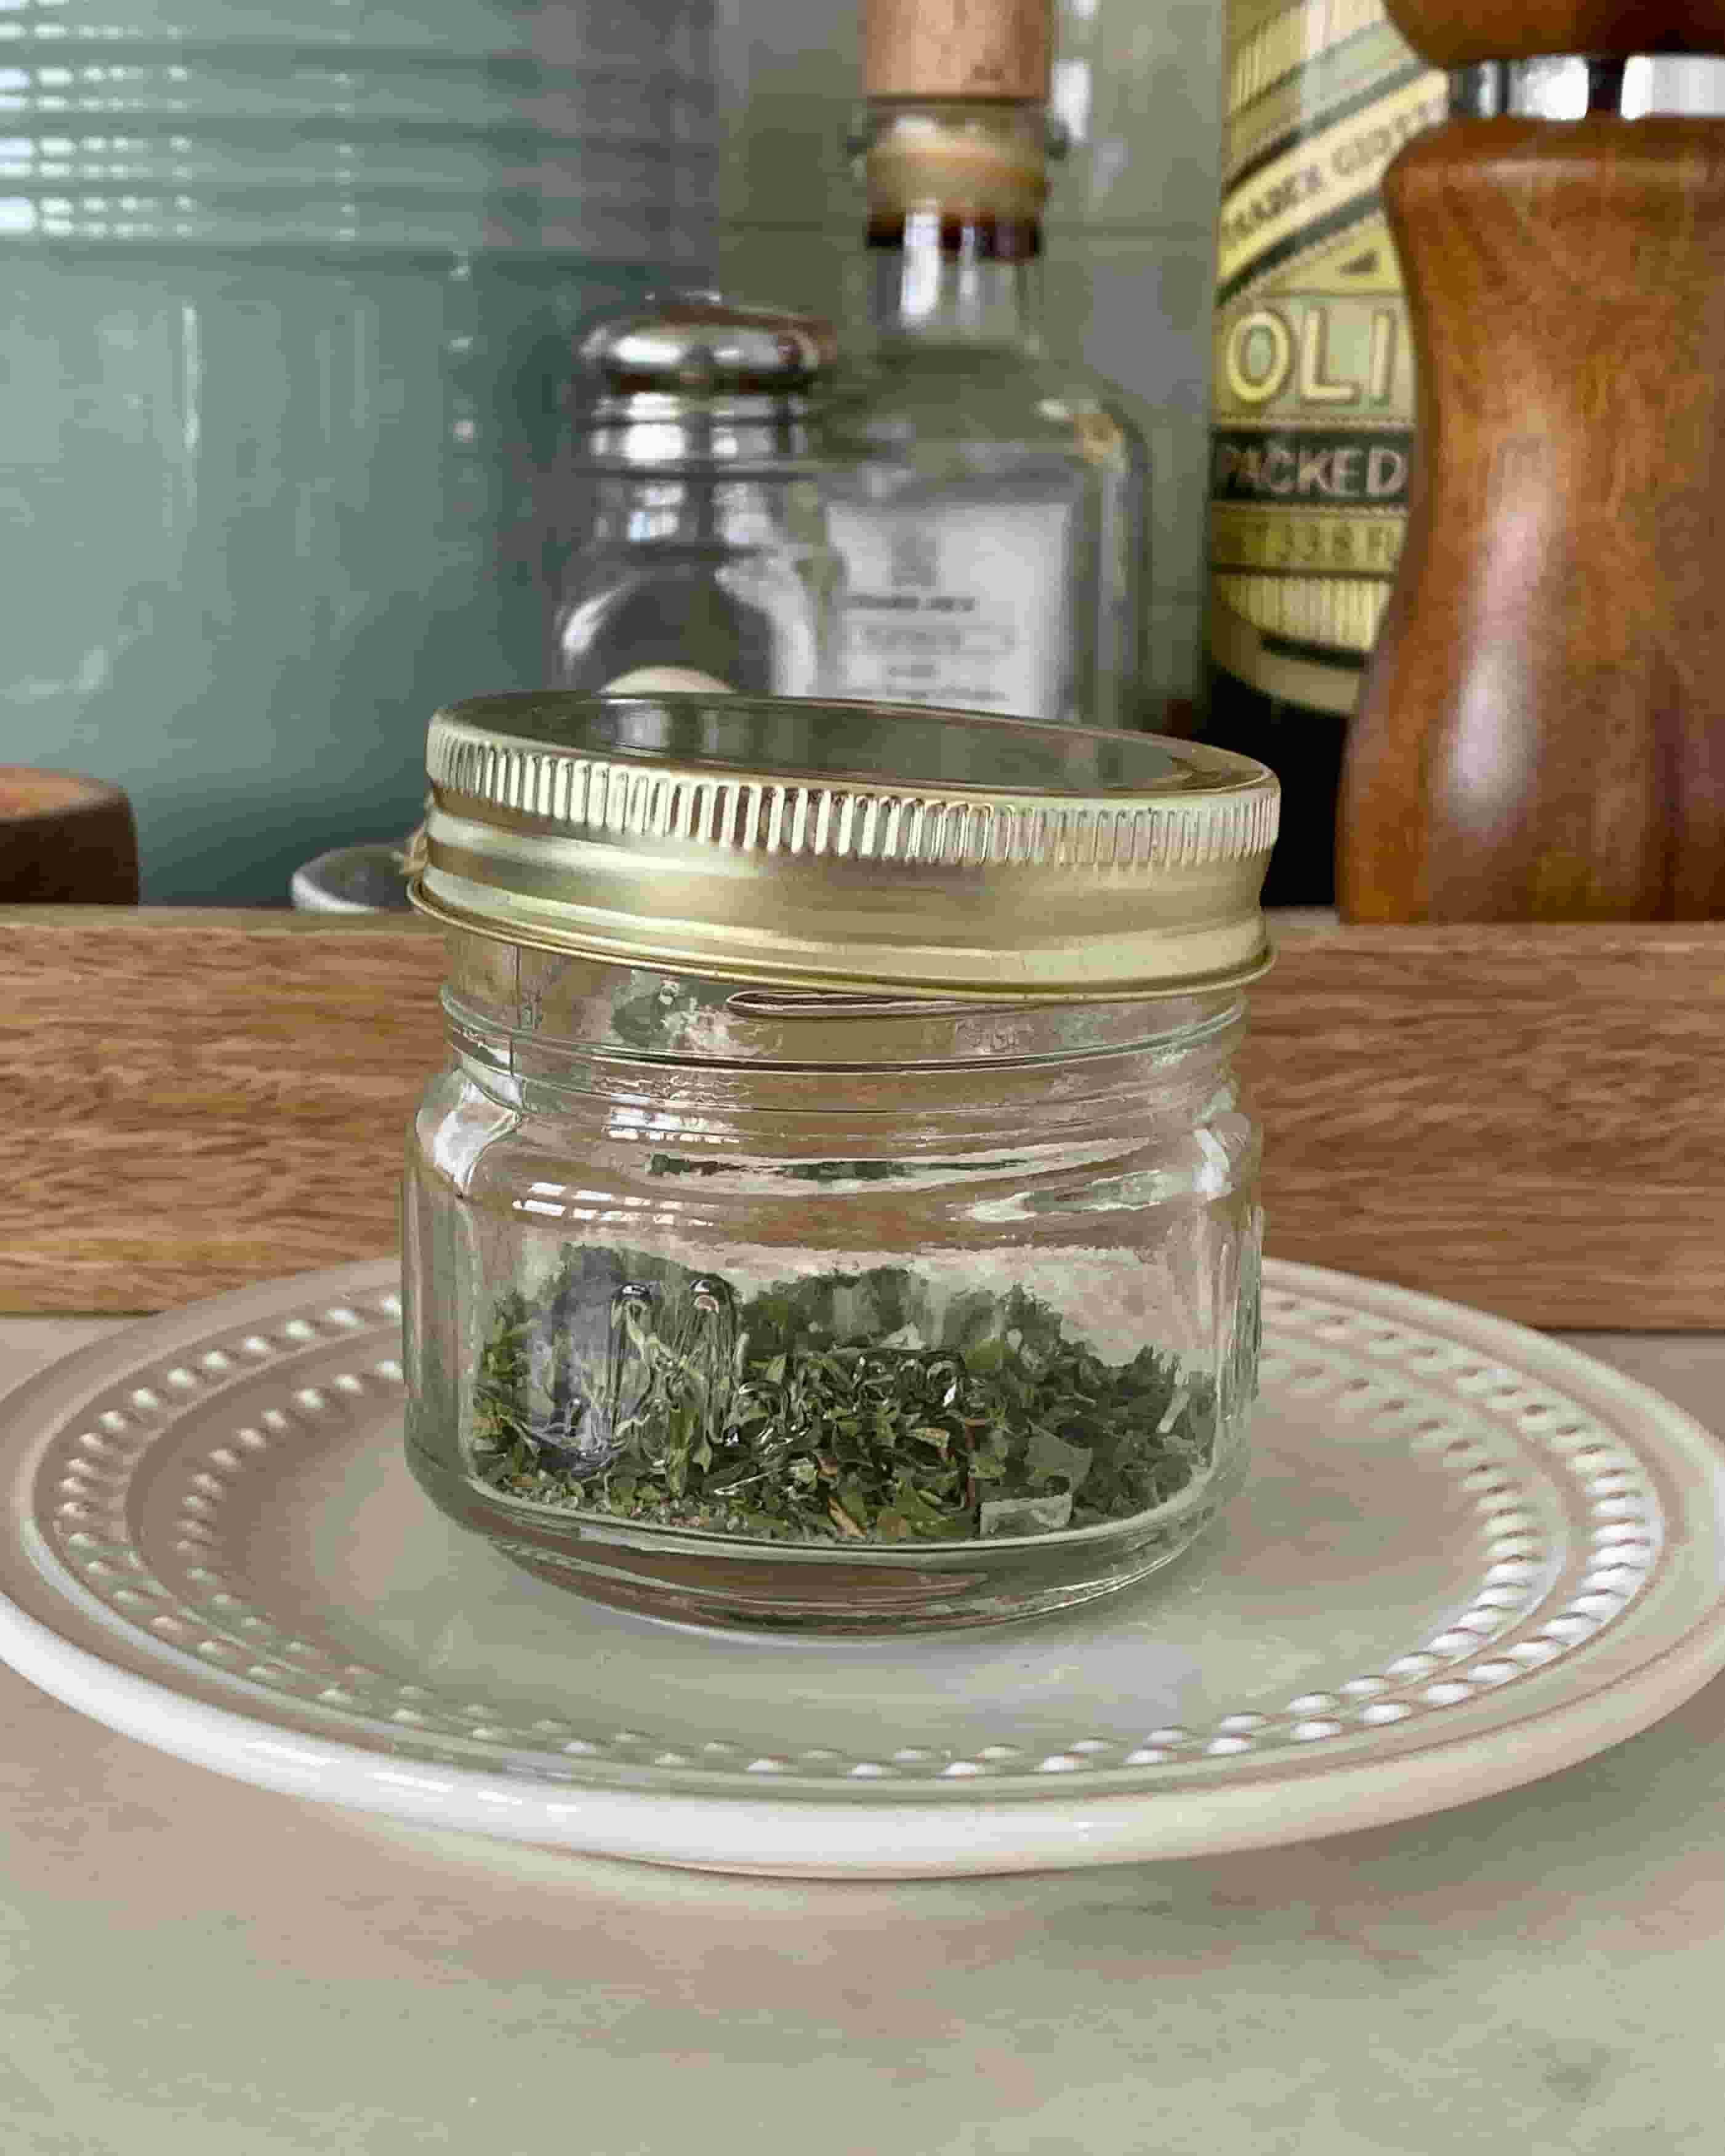 Mixed herbs in a jar